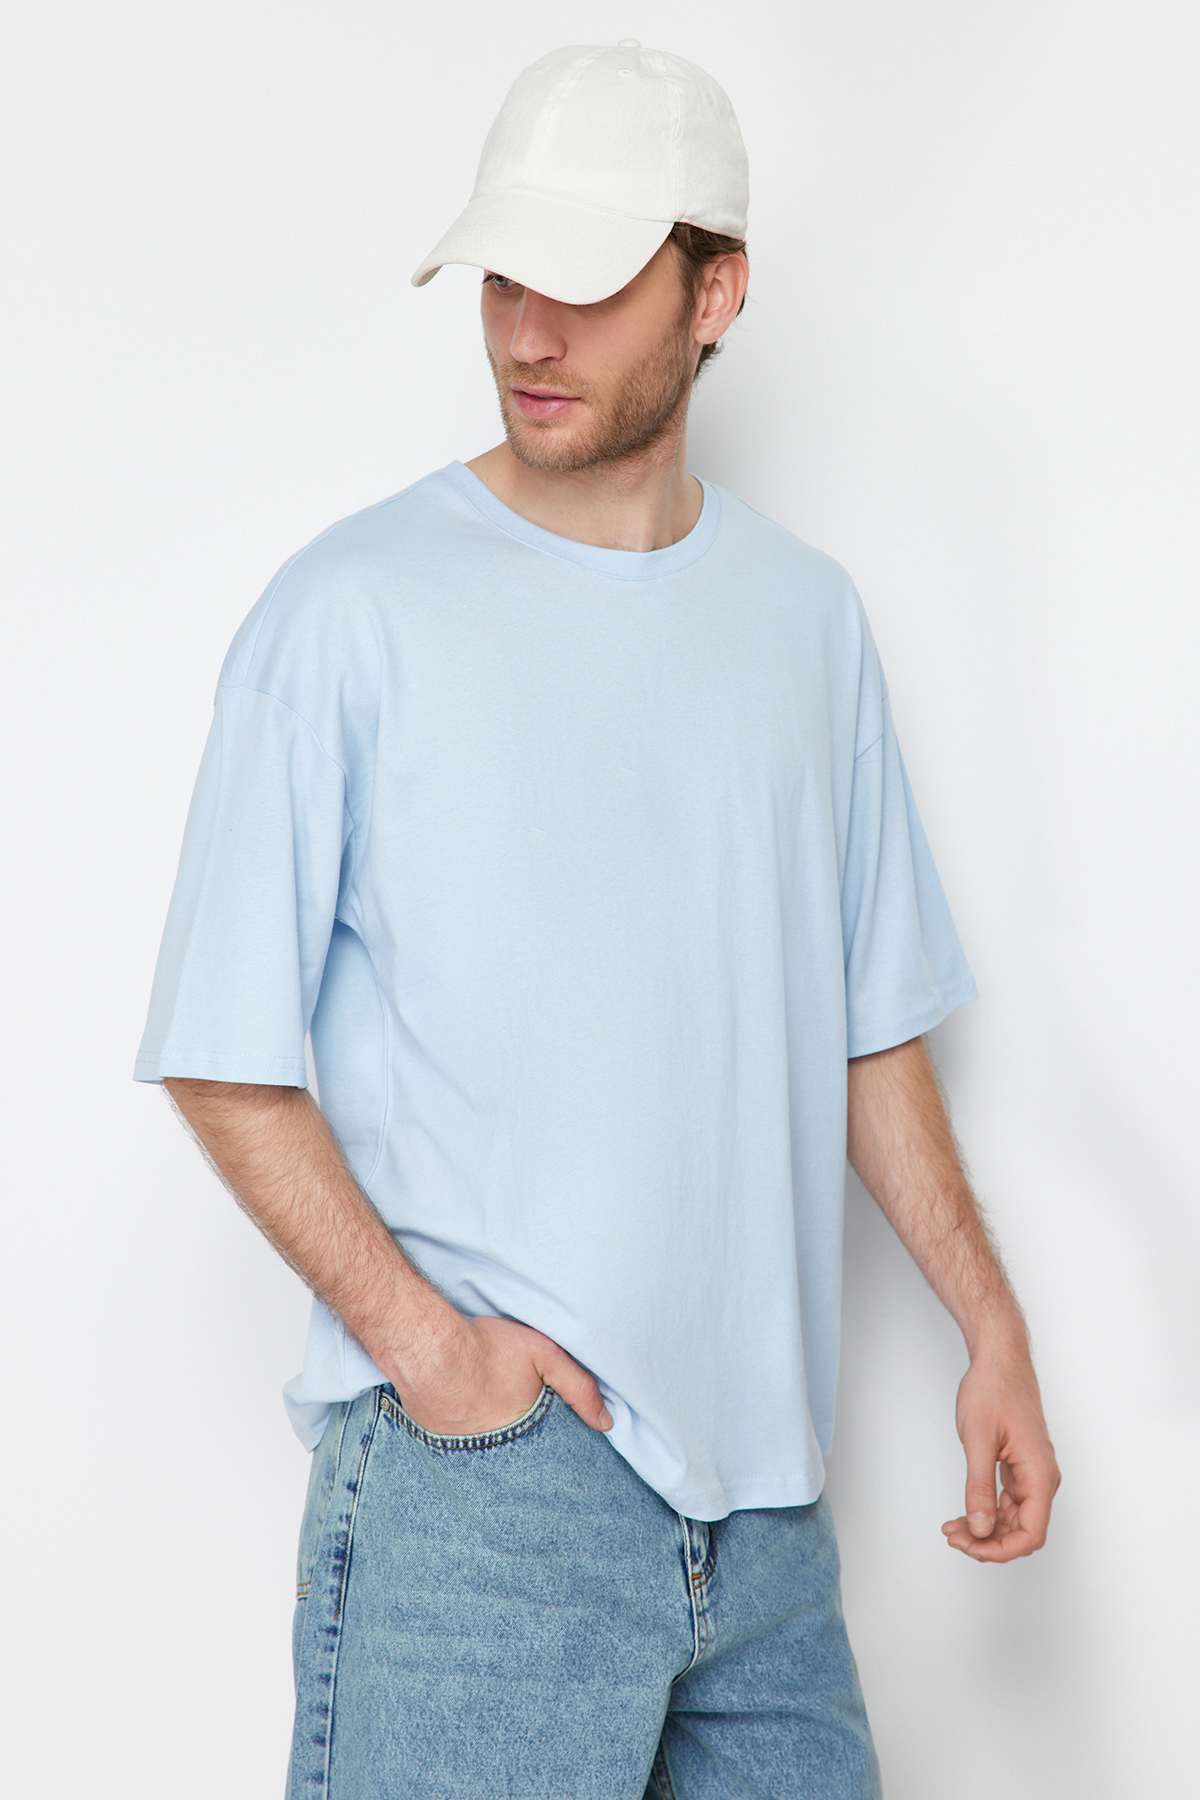 Trendyol Light Blue Men's Oversize/Wide Cut Basic 100% Cotton T-Shirt